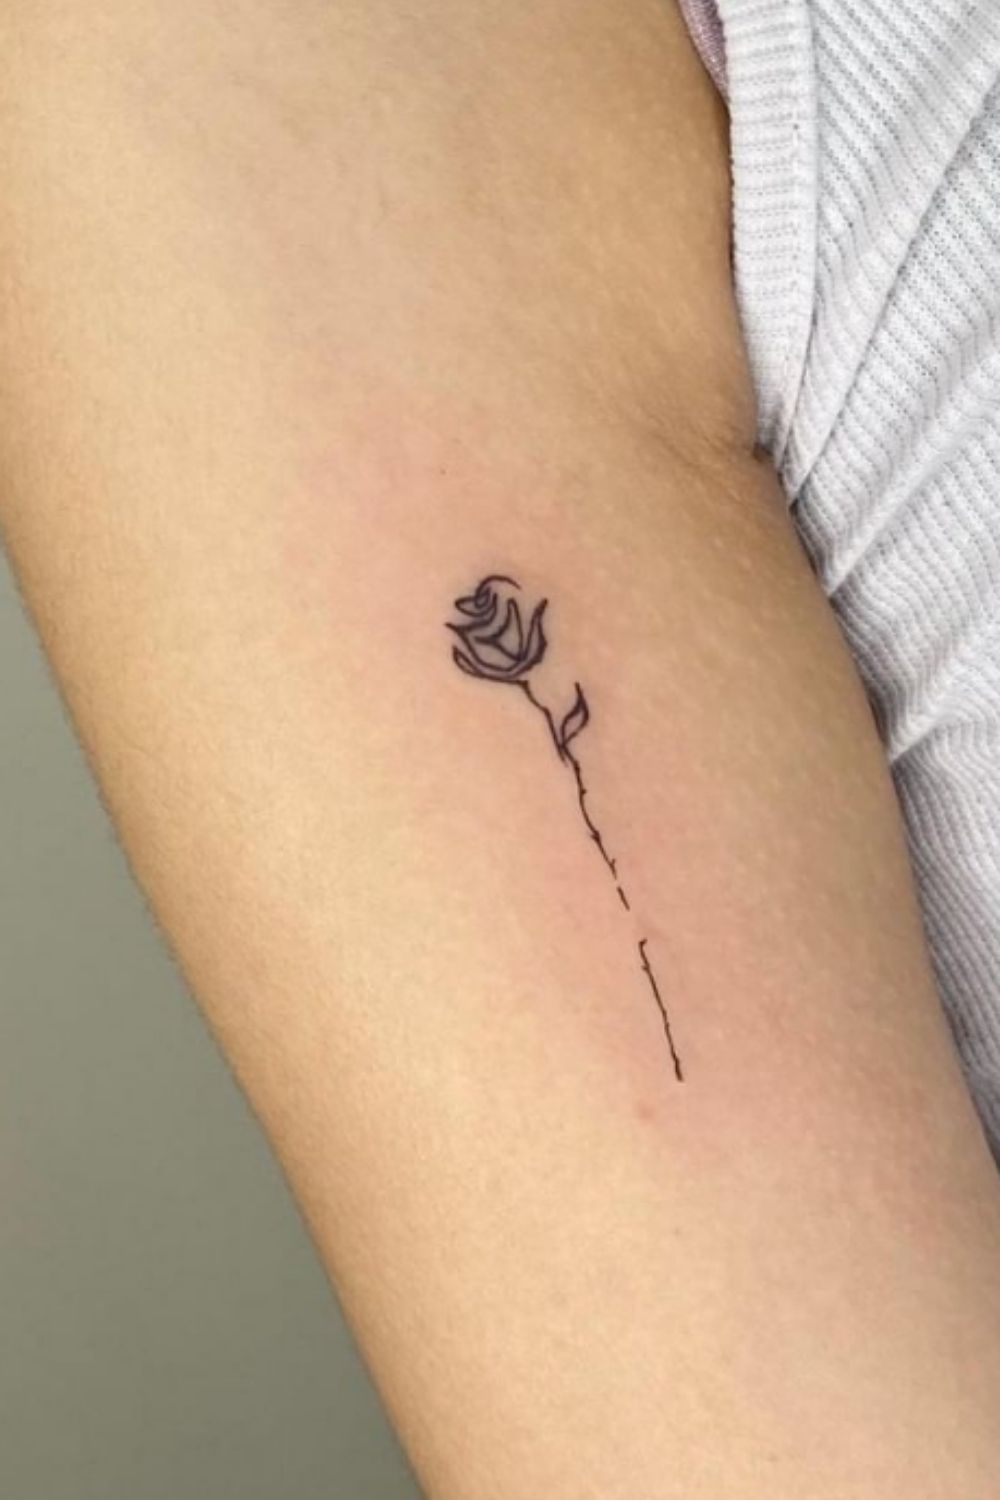 Elegant Rose Tattoo Designs for Sweet Women You Must Love 2021